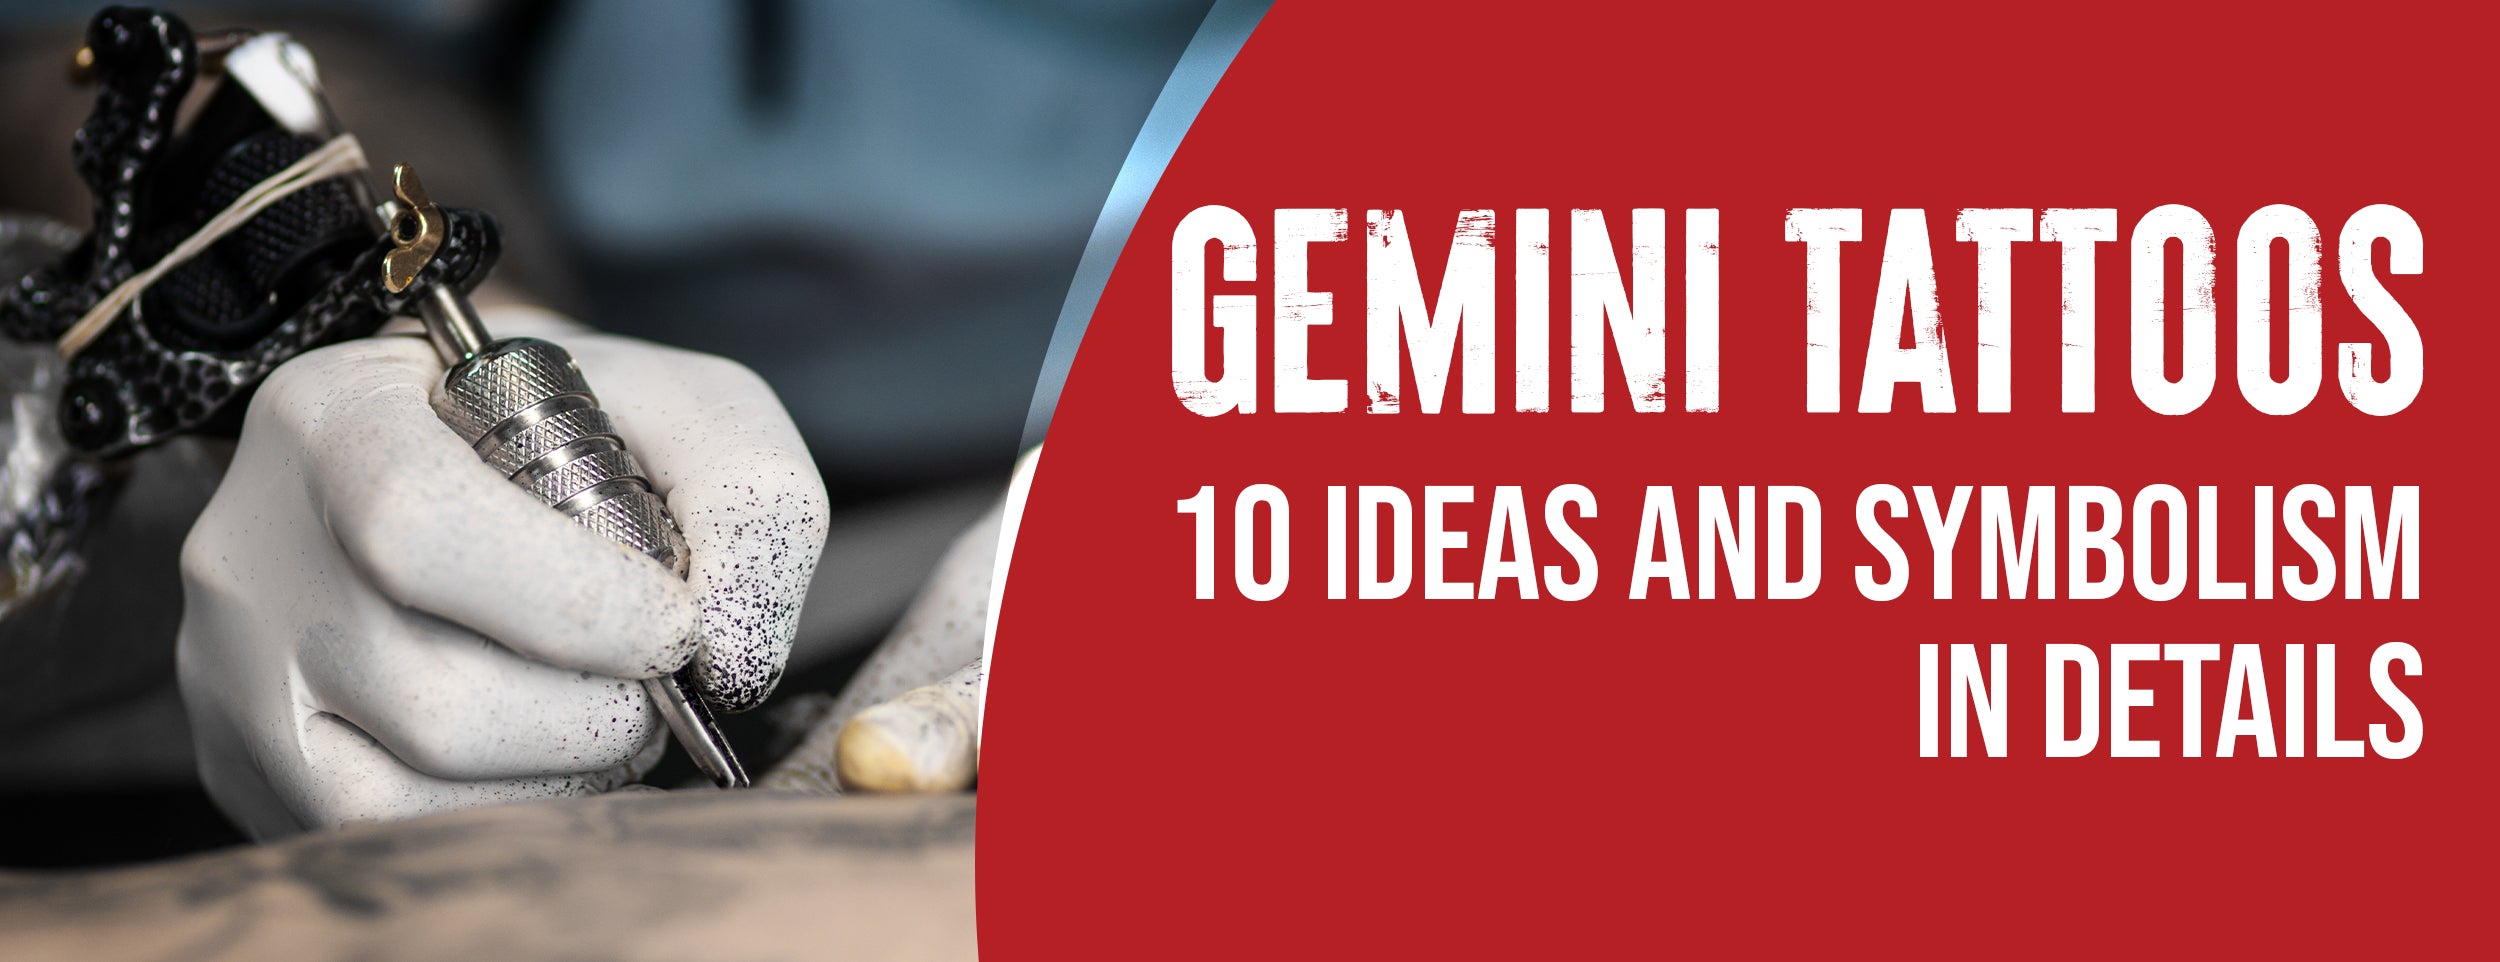 Ideas and Symbolism of Gemini Tattoos